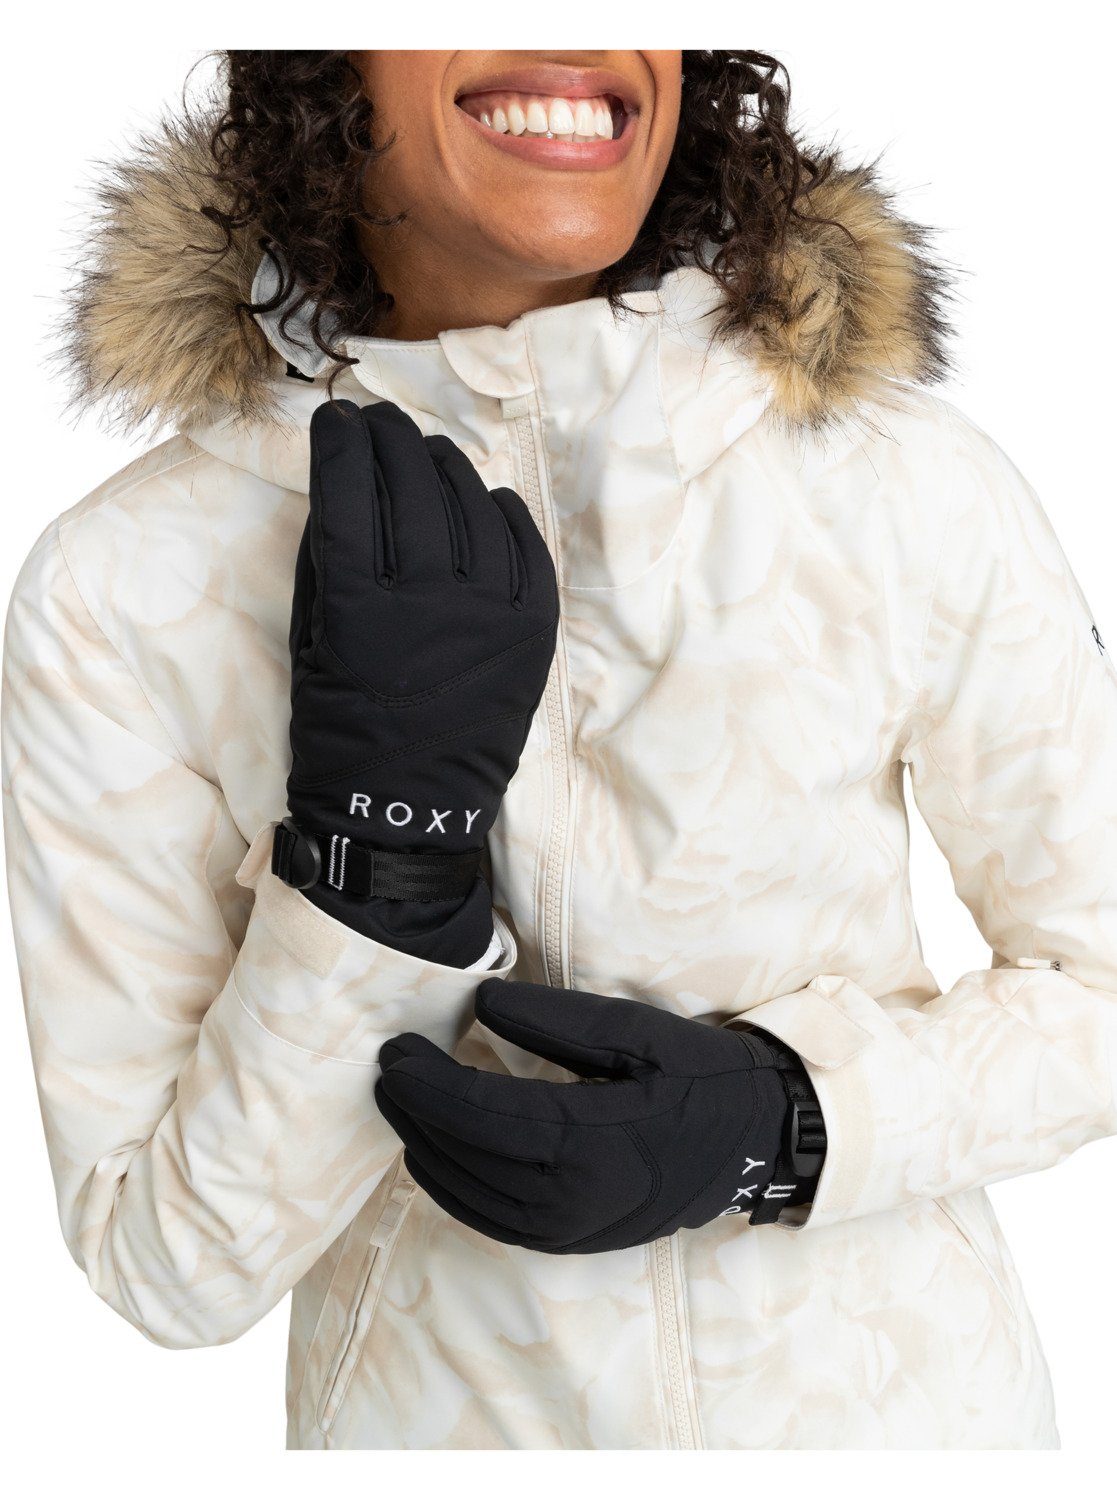 Roxy Snowboardhandschuhe ROXY Black Jetty True